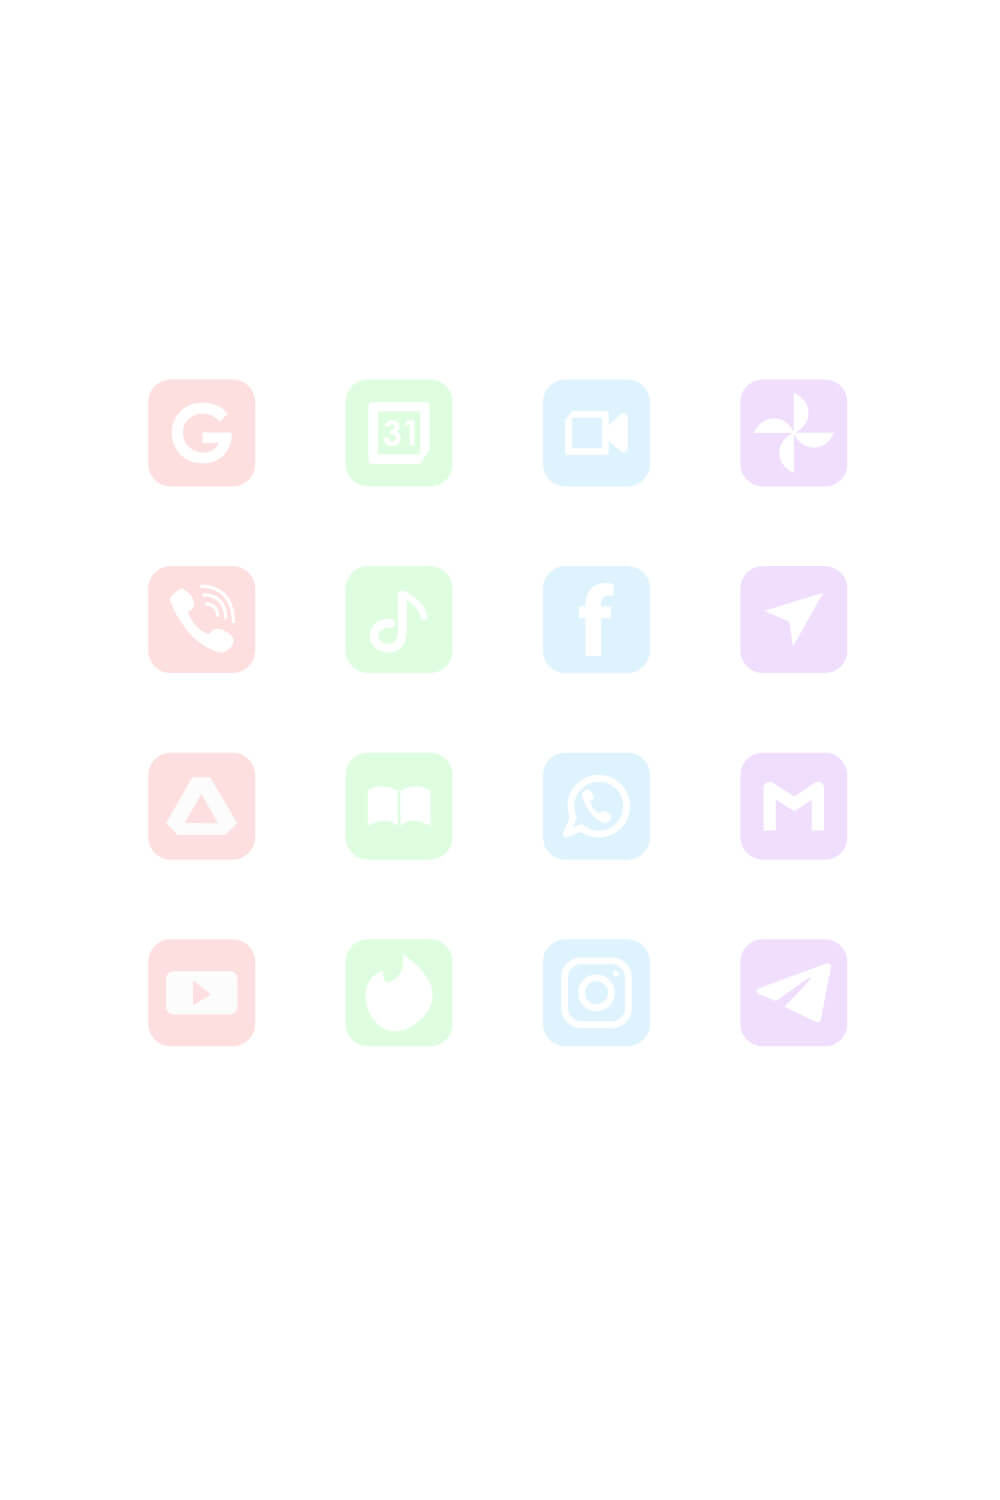 pastel app icons pinterest